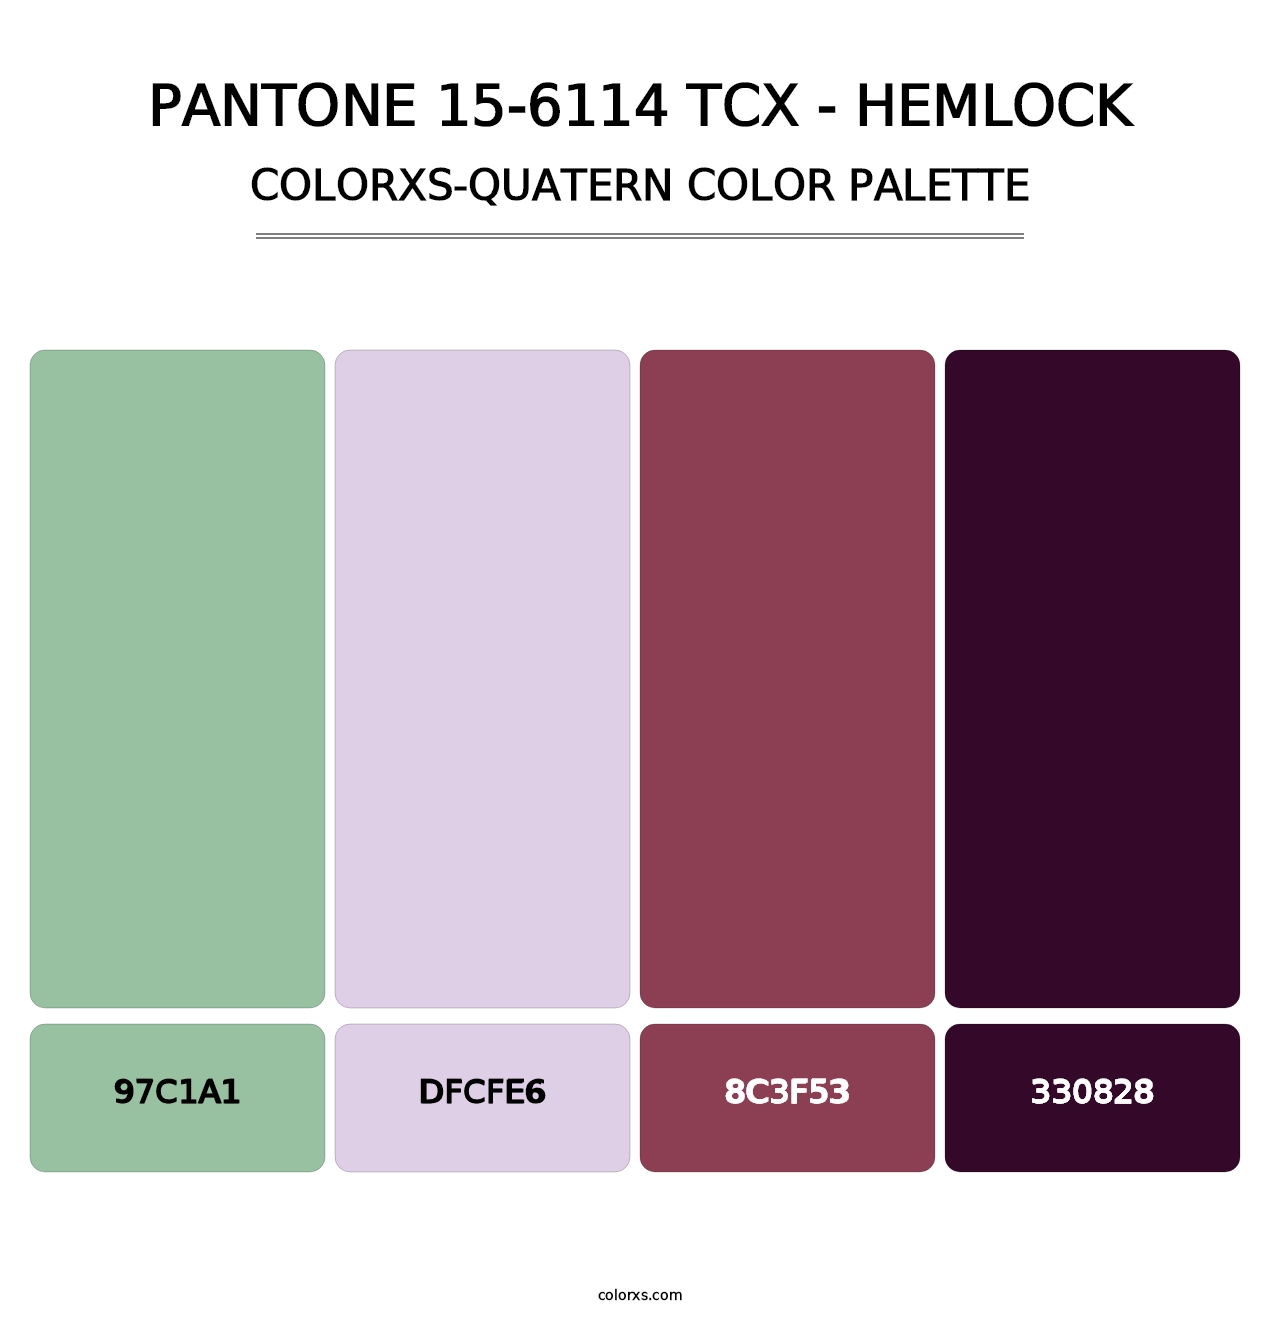 PANTONE 15-6114 TCX - Hemlock - Colorxs Quatern Palette